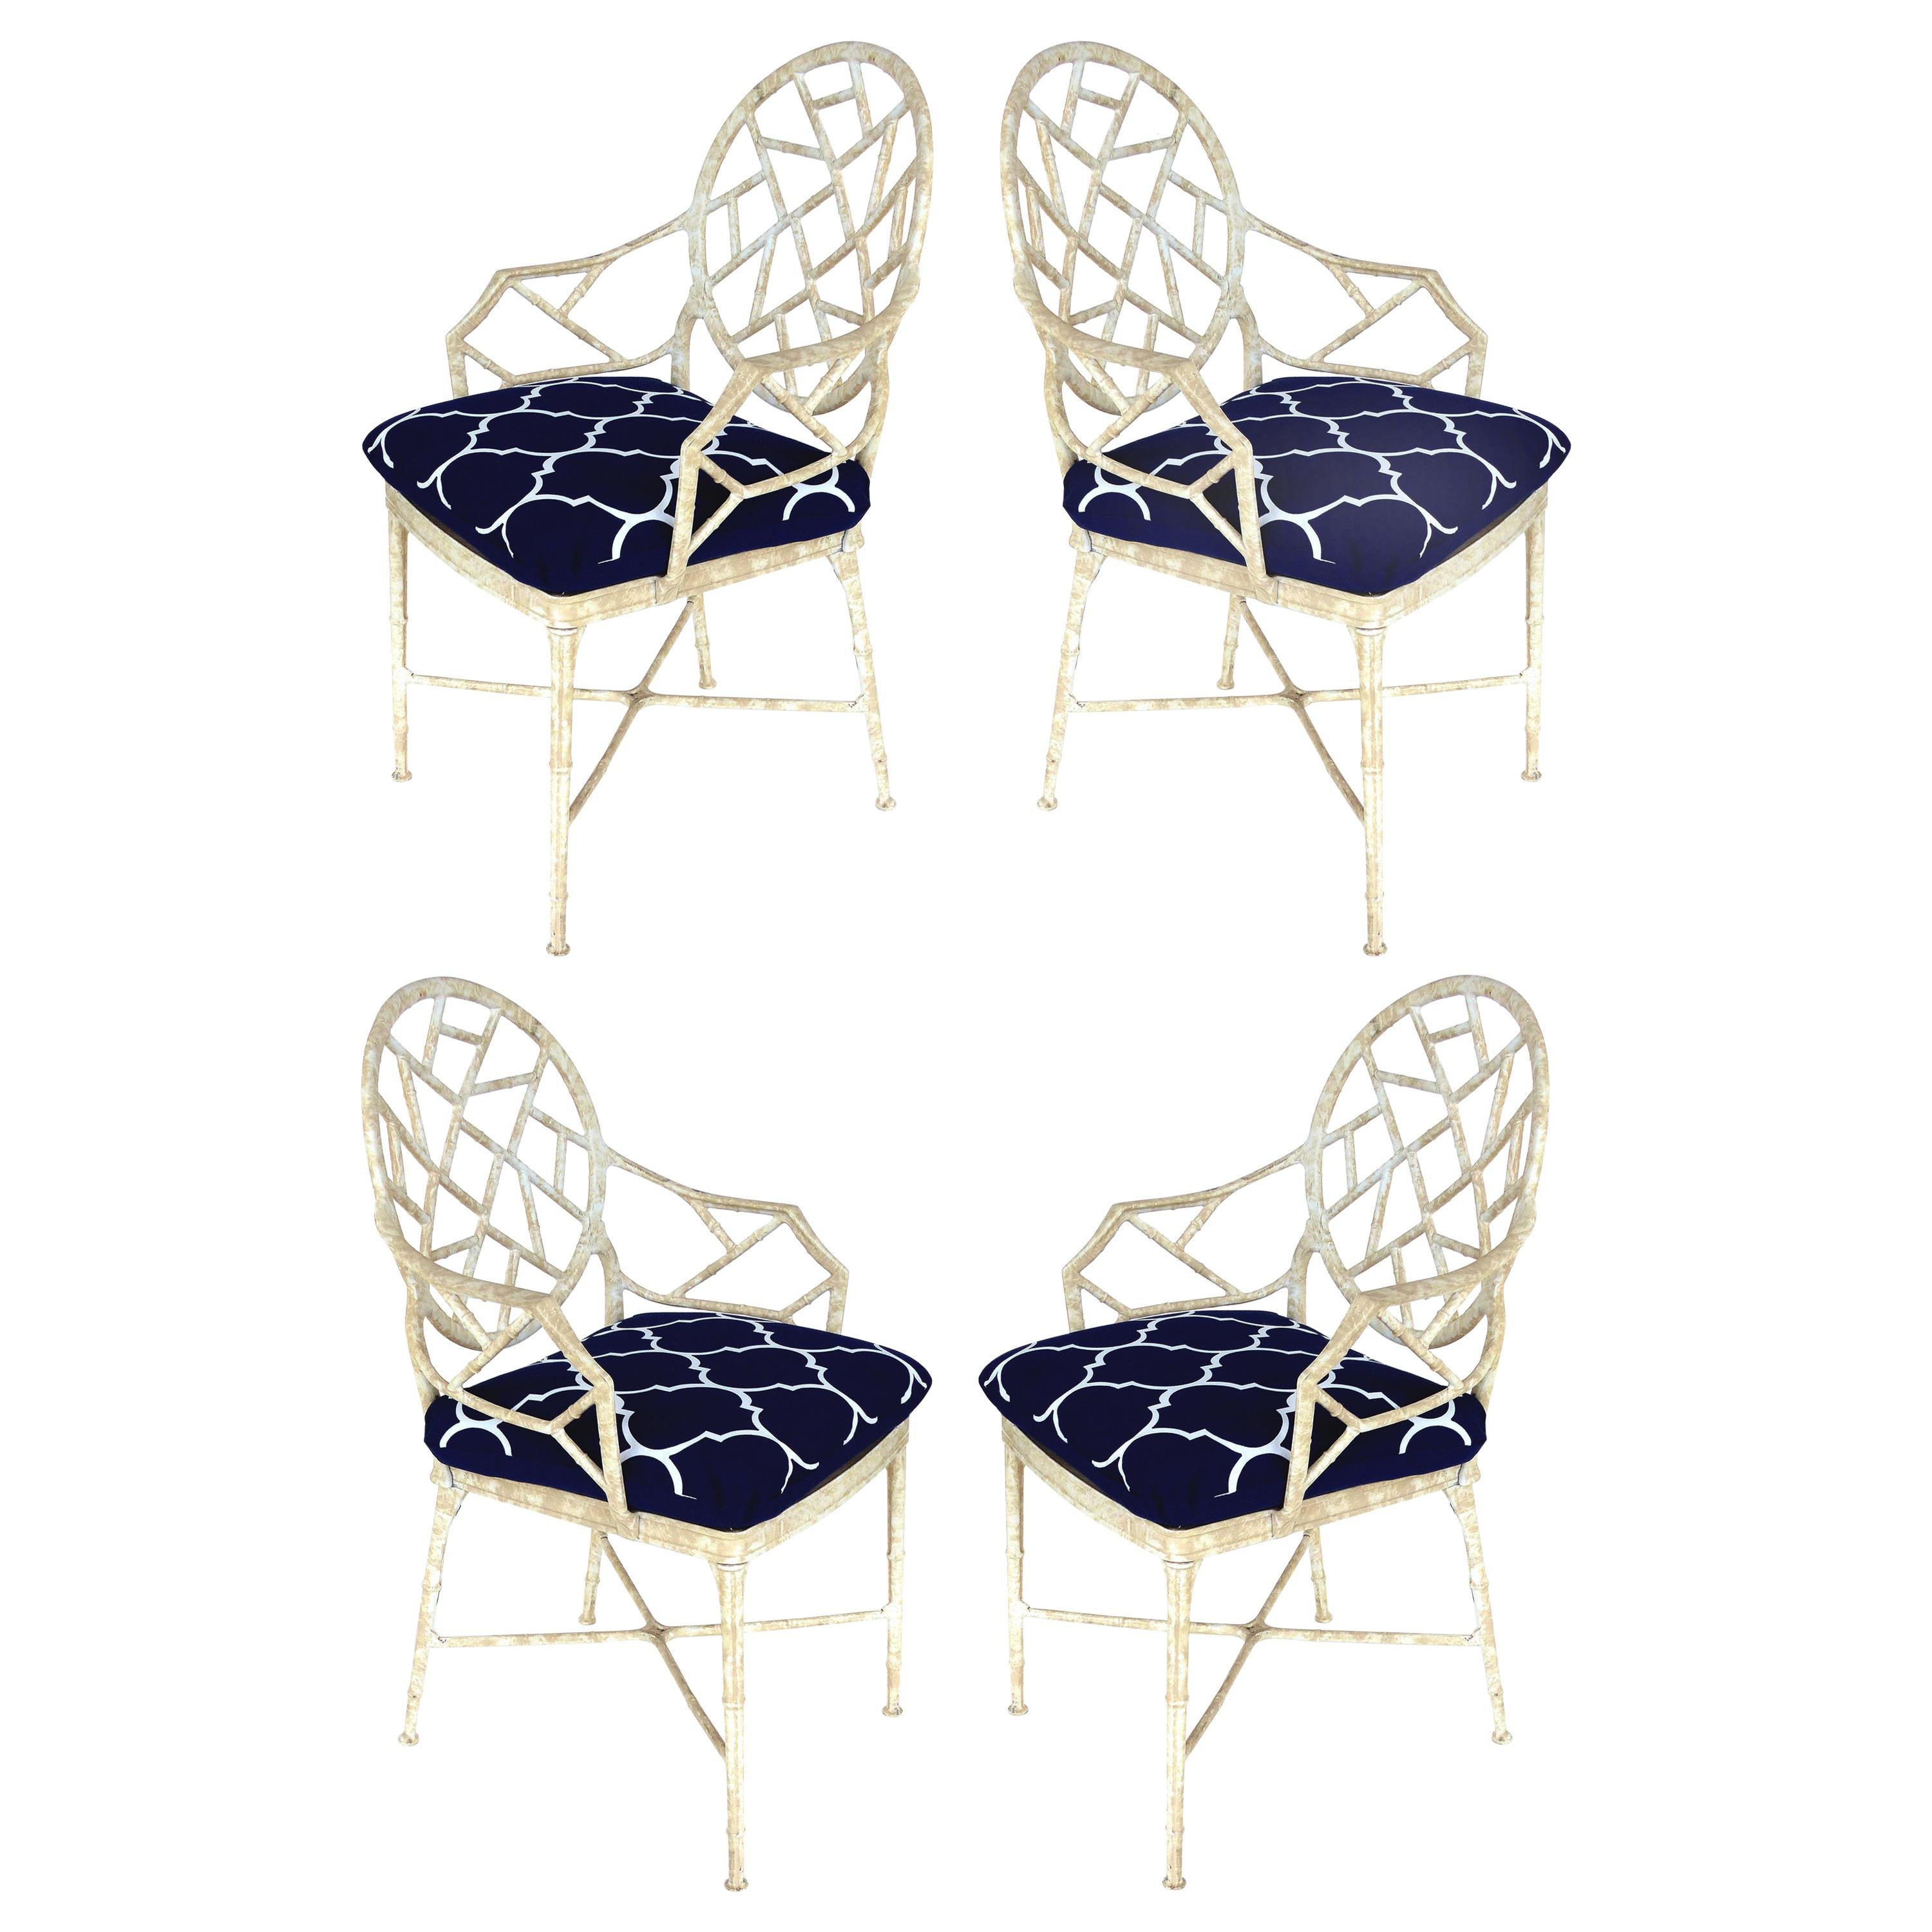 Aluminium Lattice Motif Garden Chairs with Loose Seat Cushions, Set of 4